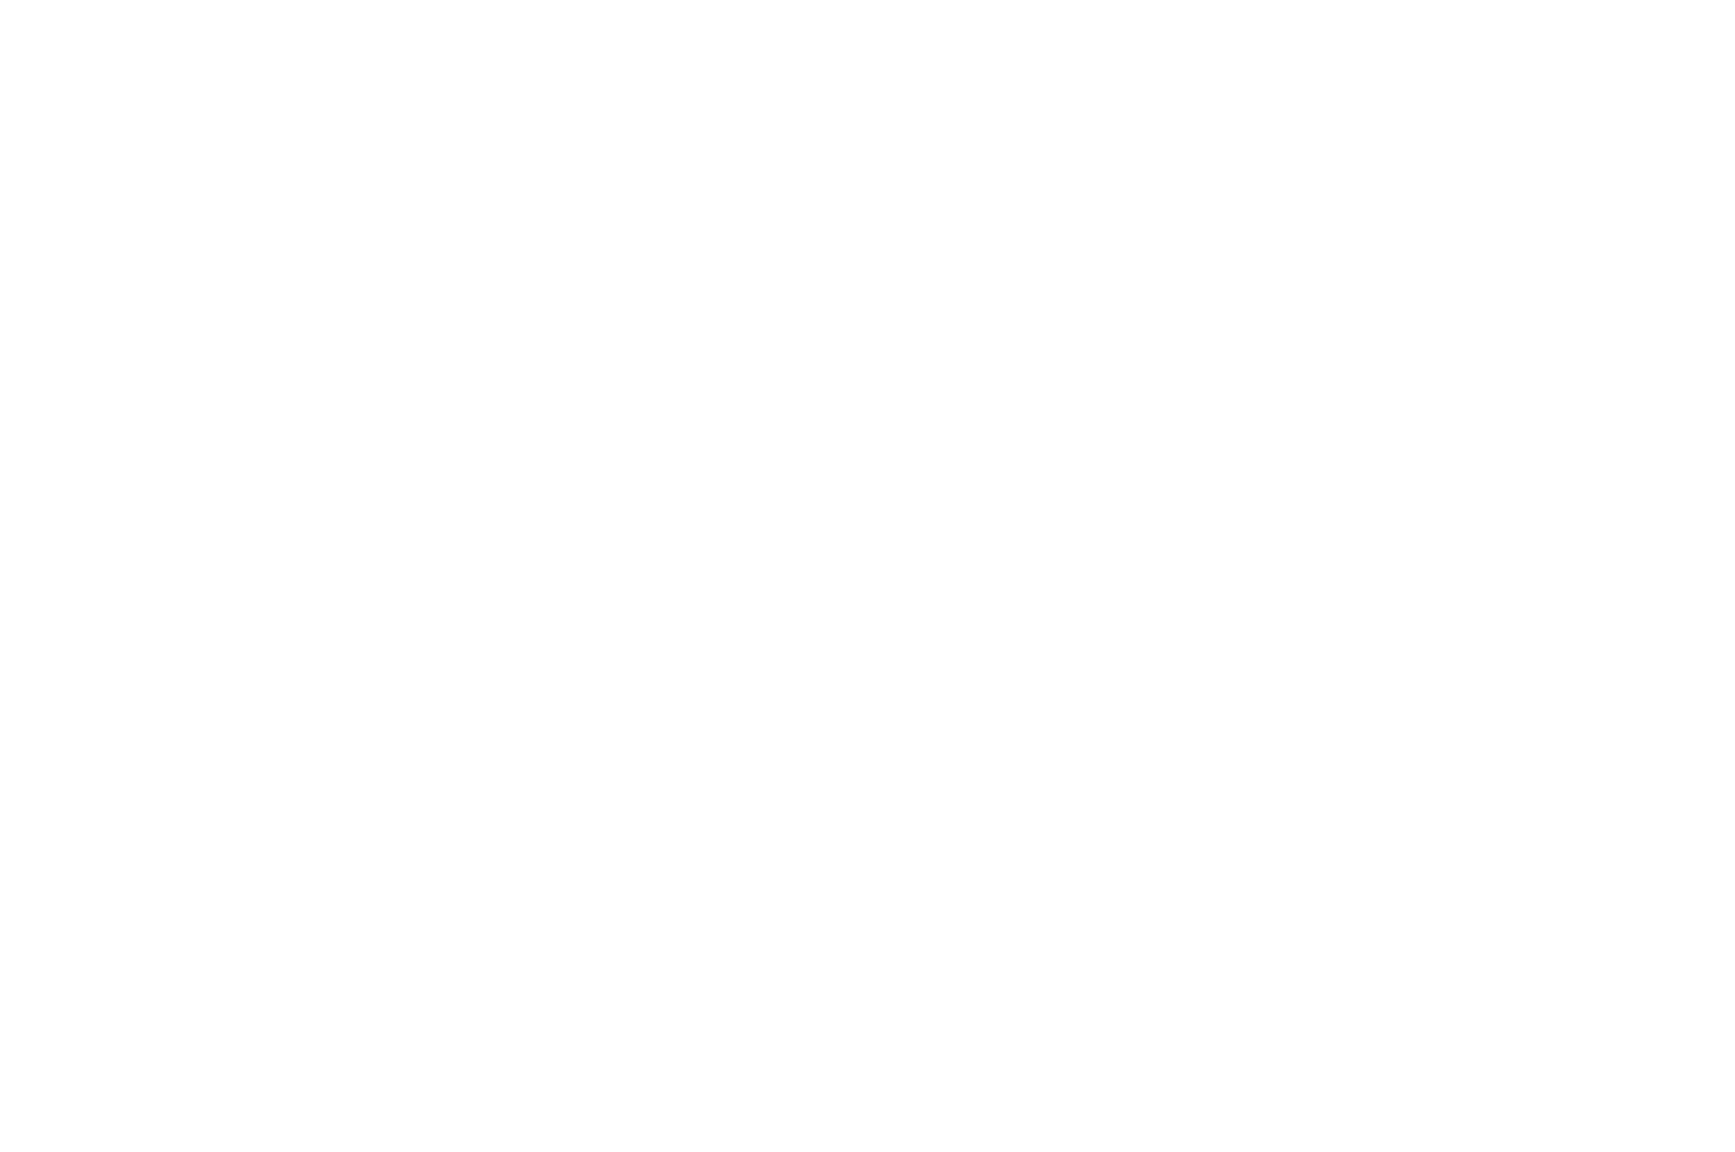 BEST CINEMATOGRAPHY - Virginia Emerging Filmmakers Festival - 2021